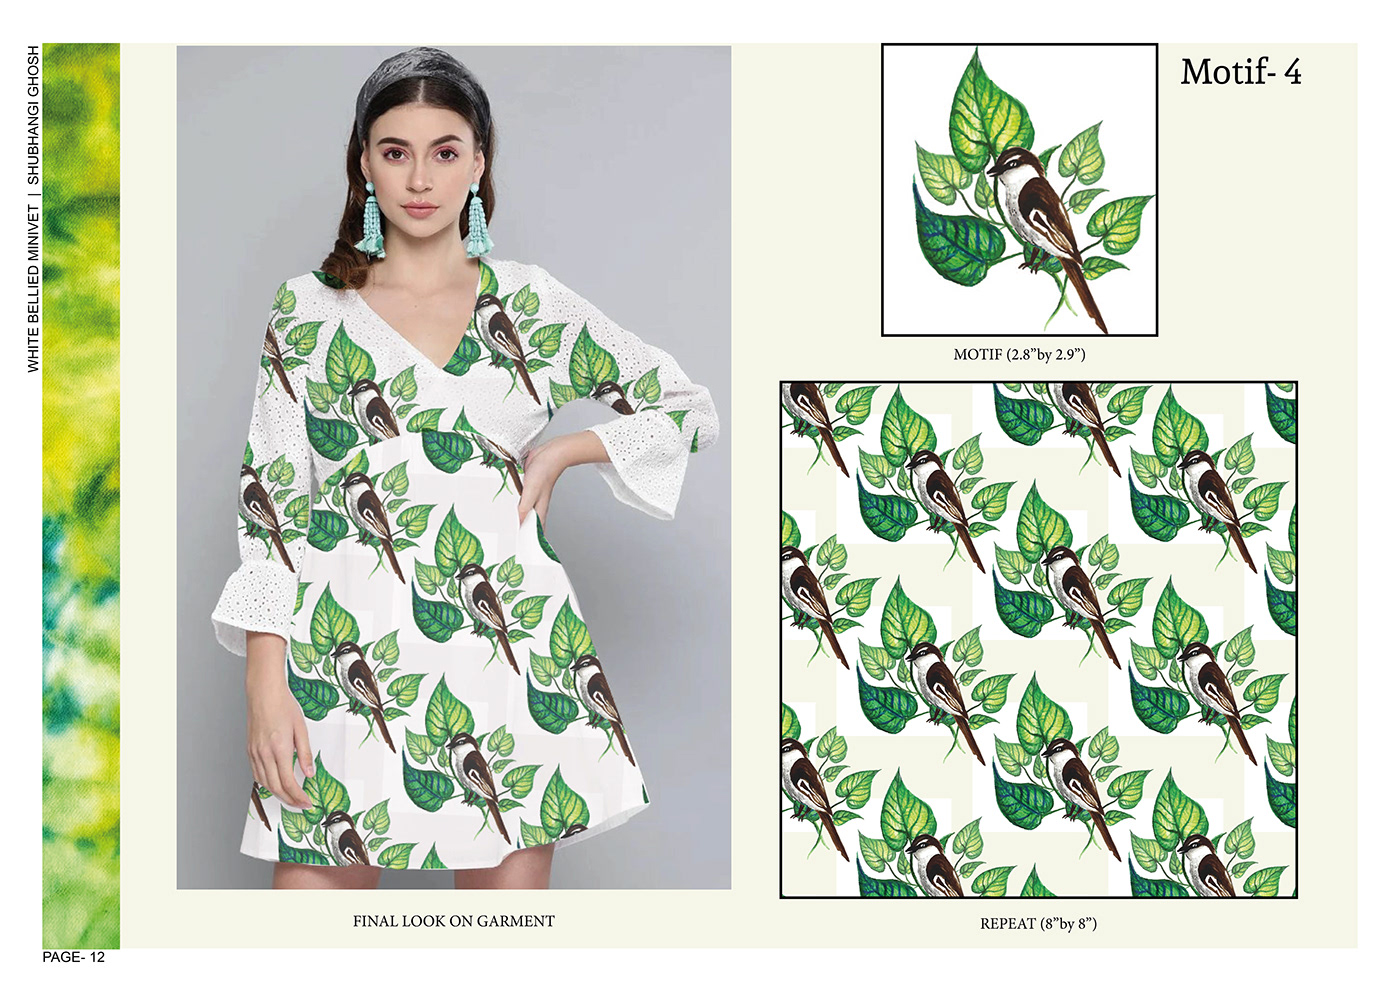 Tie-Dye batik endangered species prints photoshoot aesthetic motif fashion design embroidary Value Addition 